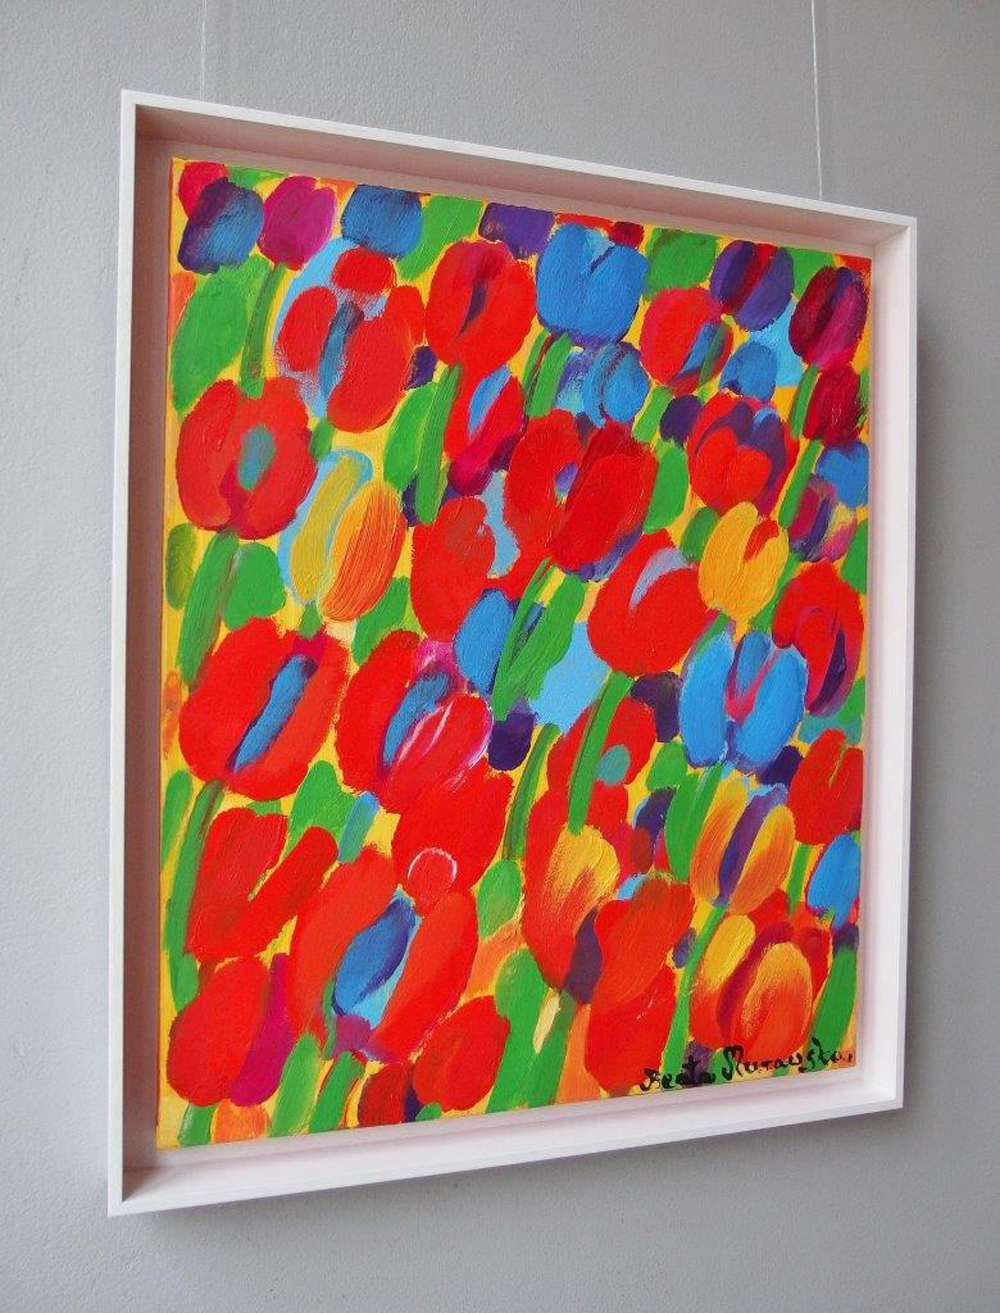 Beata Murawska - Red desire (Oil on Canvas | Größe: 56 x 66 cm | Preis: 3500 PLN)